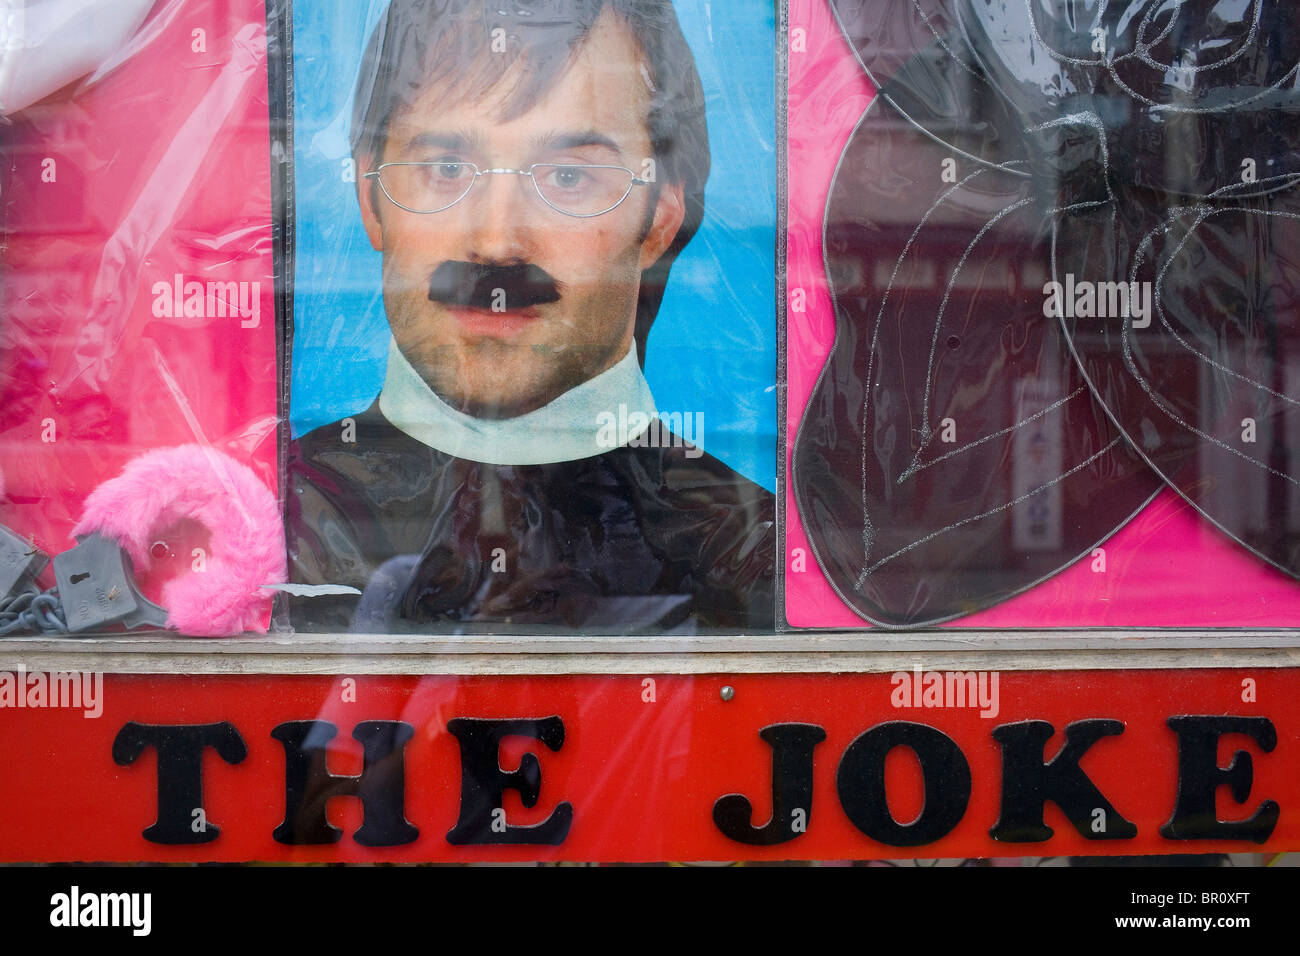 The Joke  - shop window with Vicar's costume. Stock Photo